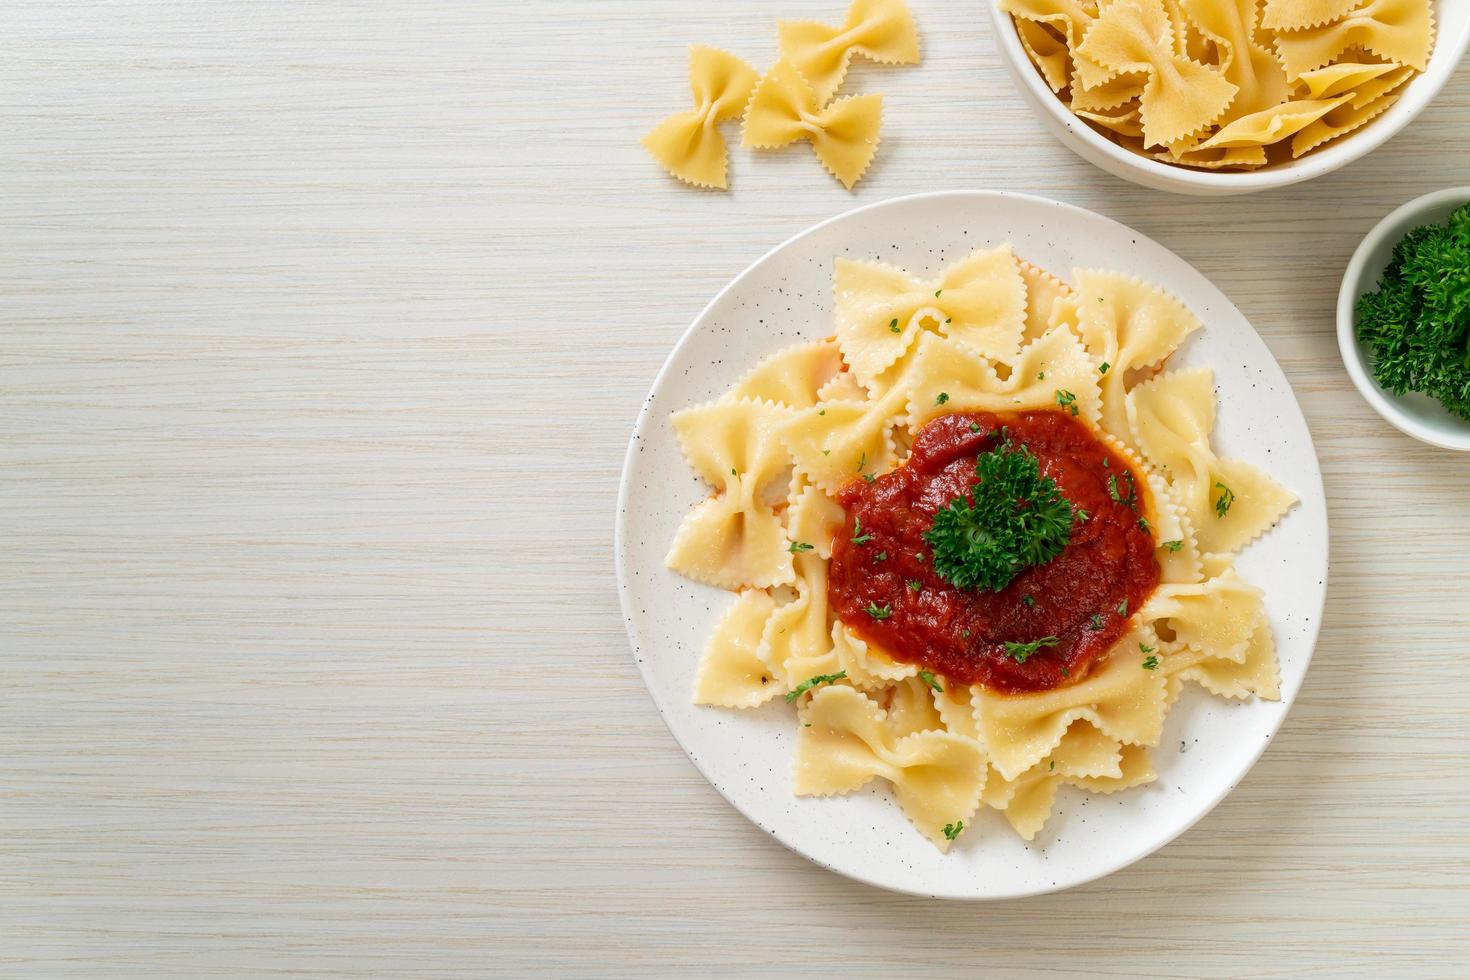 farfalle pasta i tomatsås med persilja - italiensk matstil foto